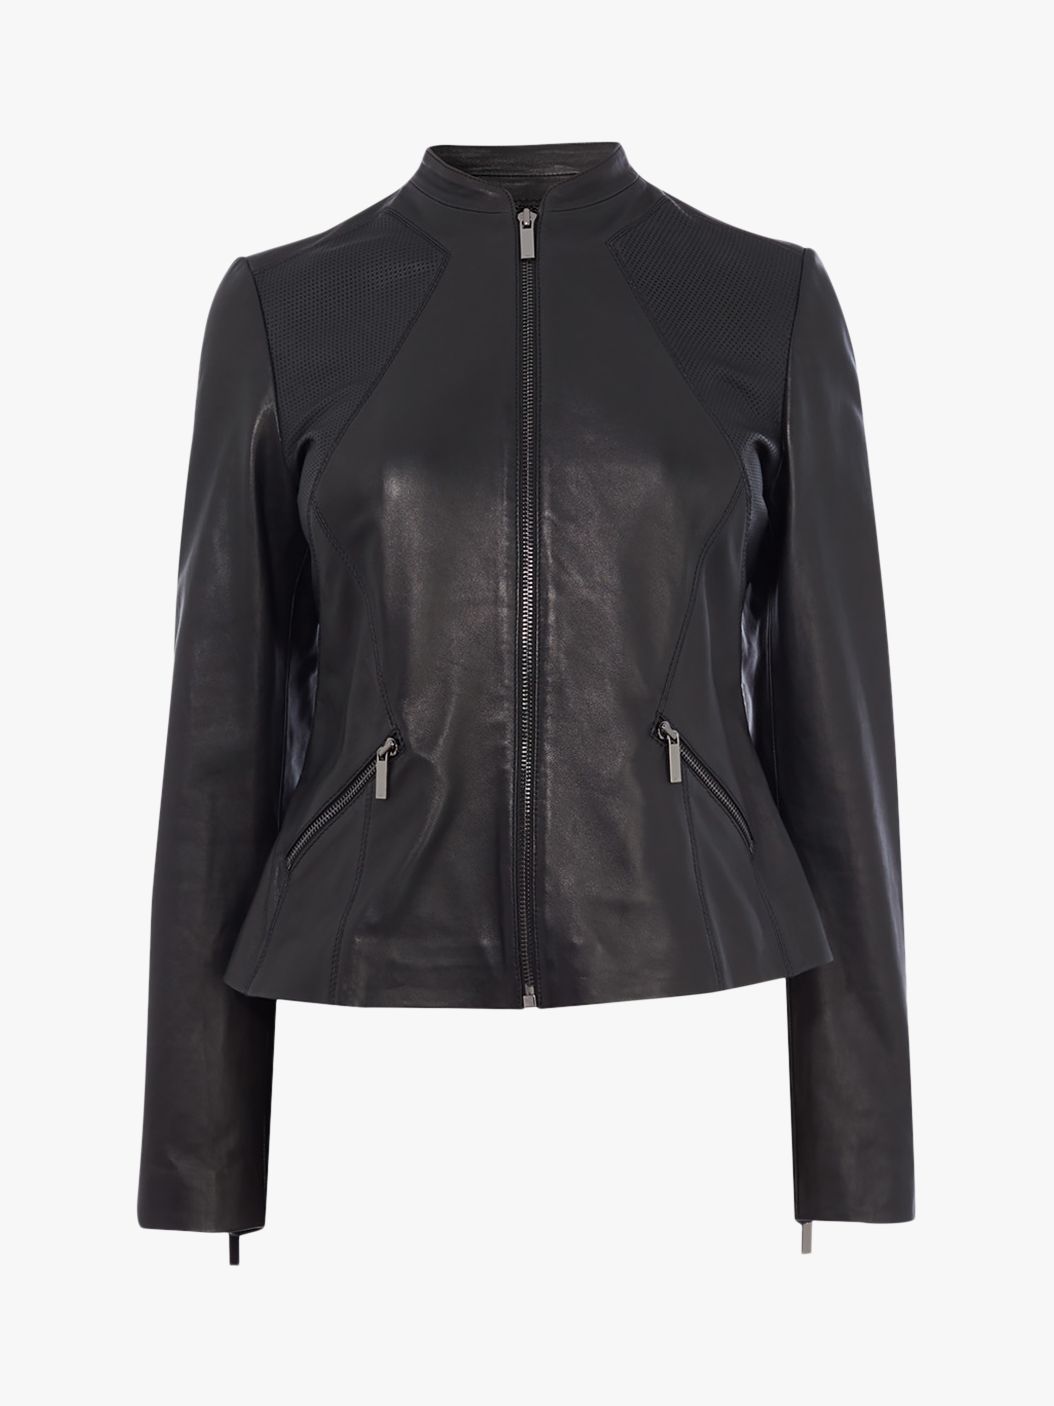 Karen Millen Collarless Leather Jacket, Black